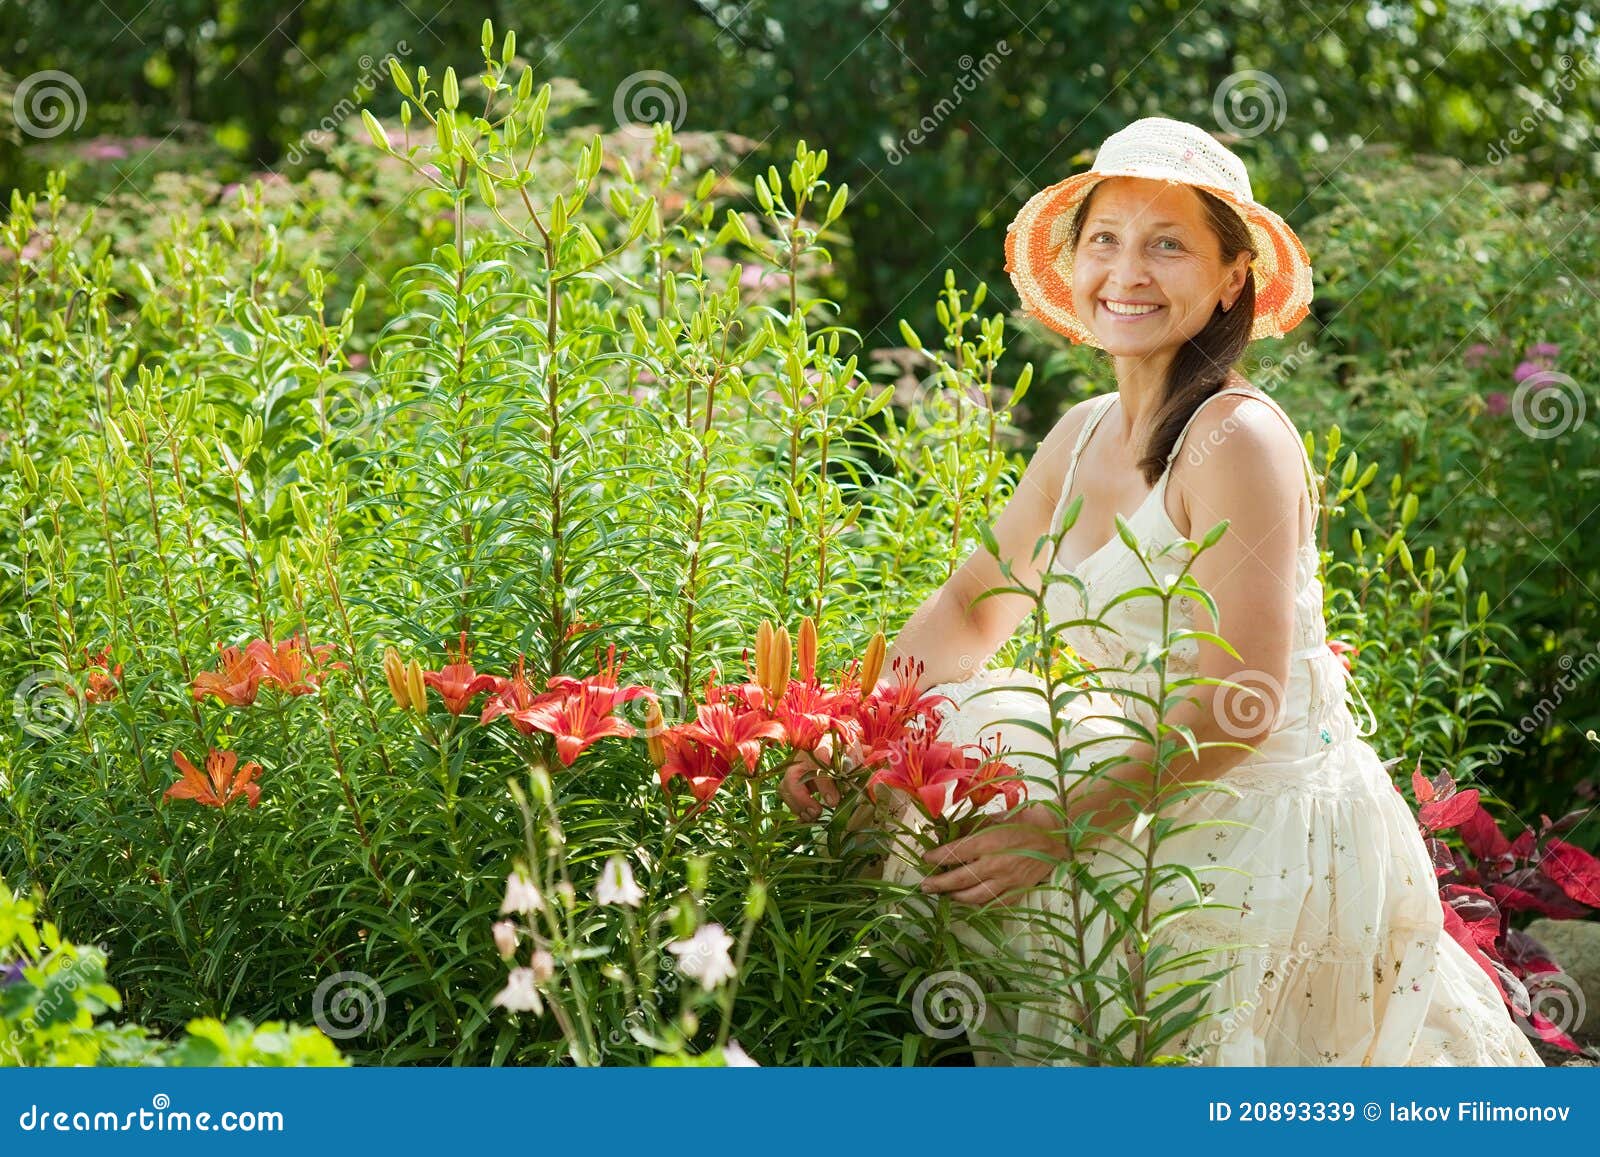 https://thumbs.dreamstime.com/z/happy-woman-lily-plant-20893339.jpg